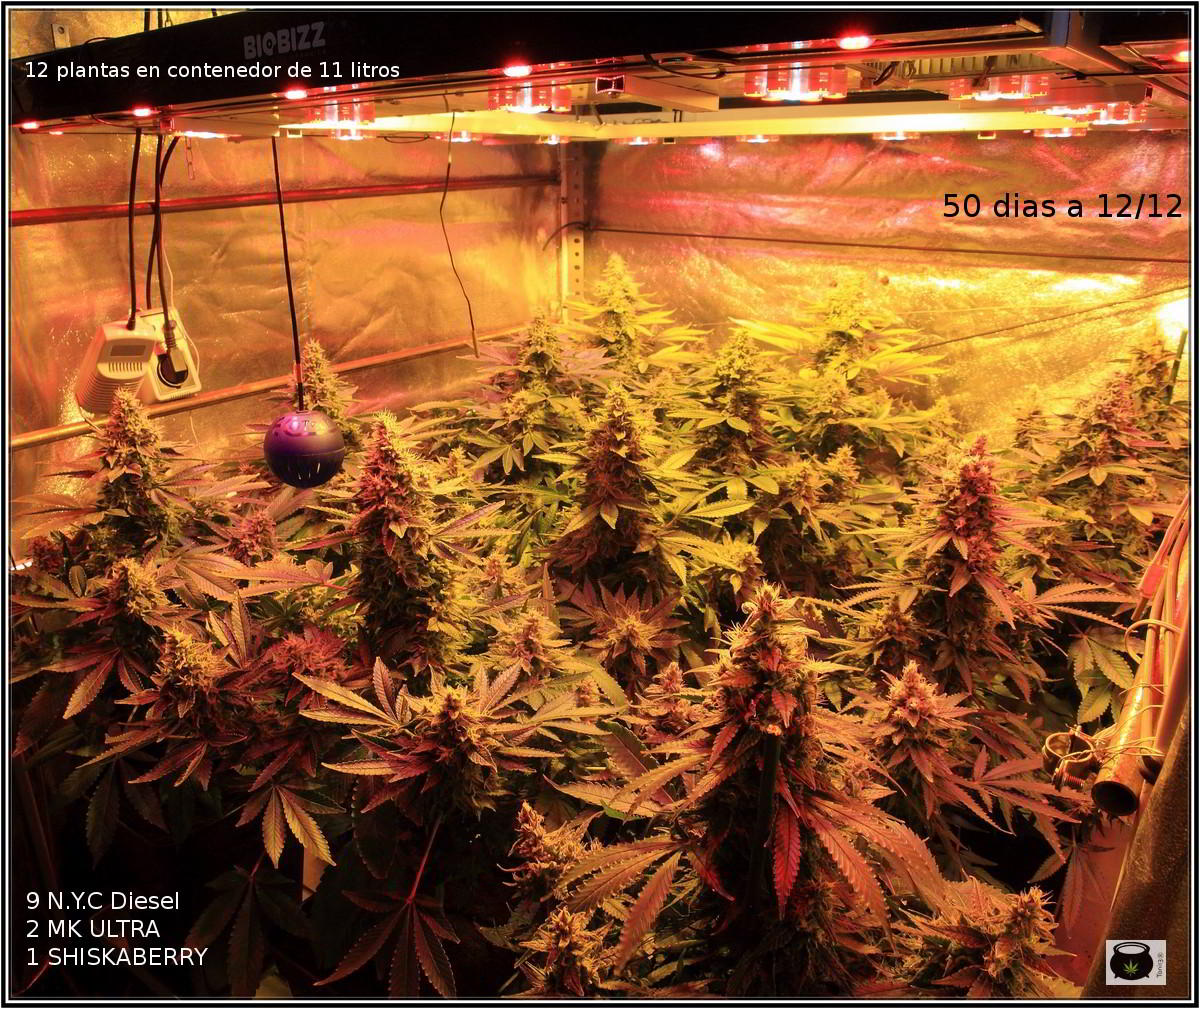 Cultivo de marihuana LED no aporta calor a las plantas